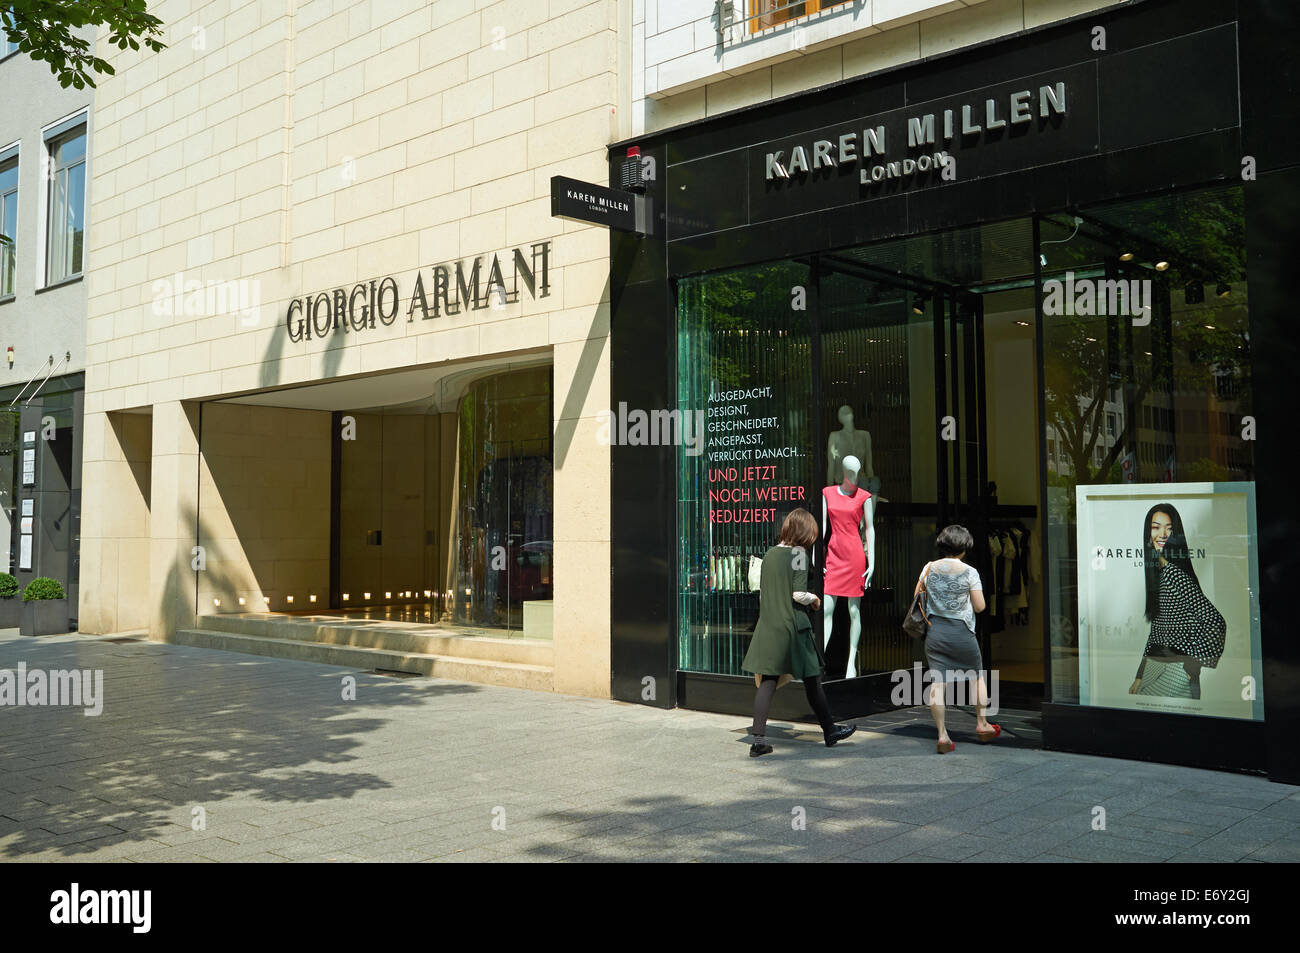 Karen Millen negozio di abbigliamento, Konigsallee, Dusseldorf, Germania. Foto Stock